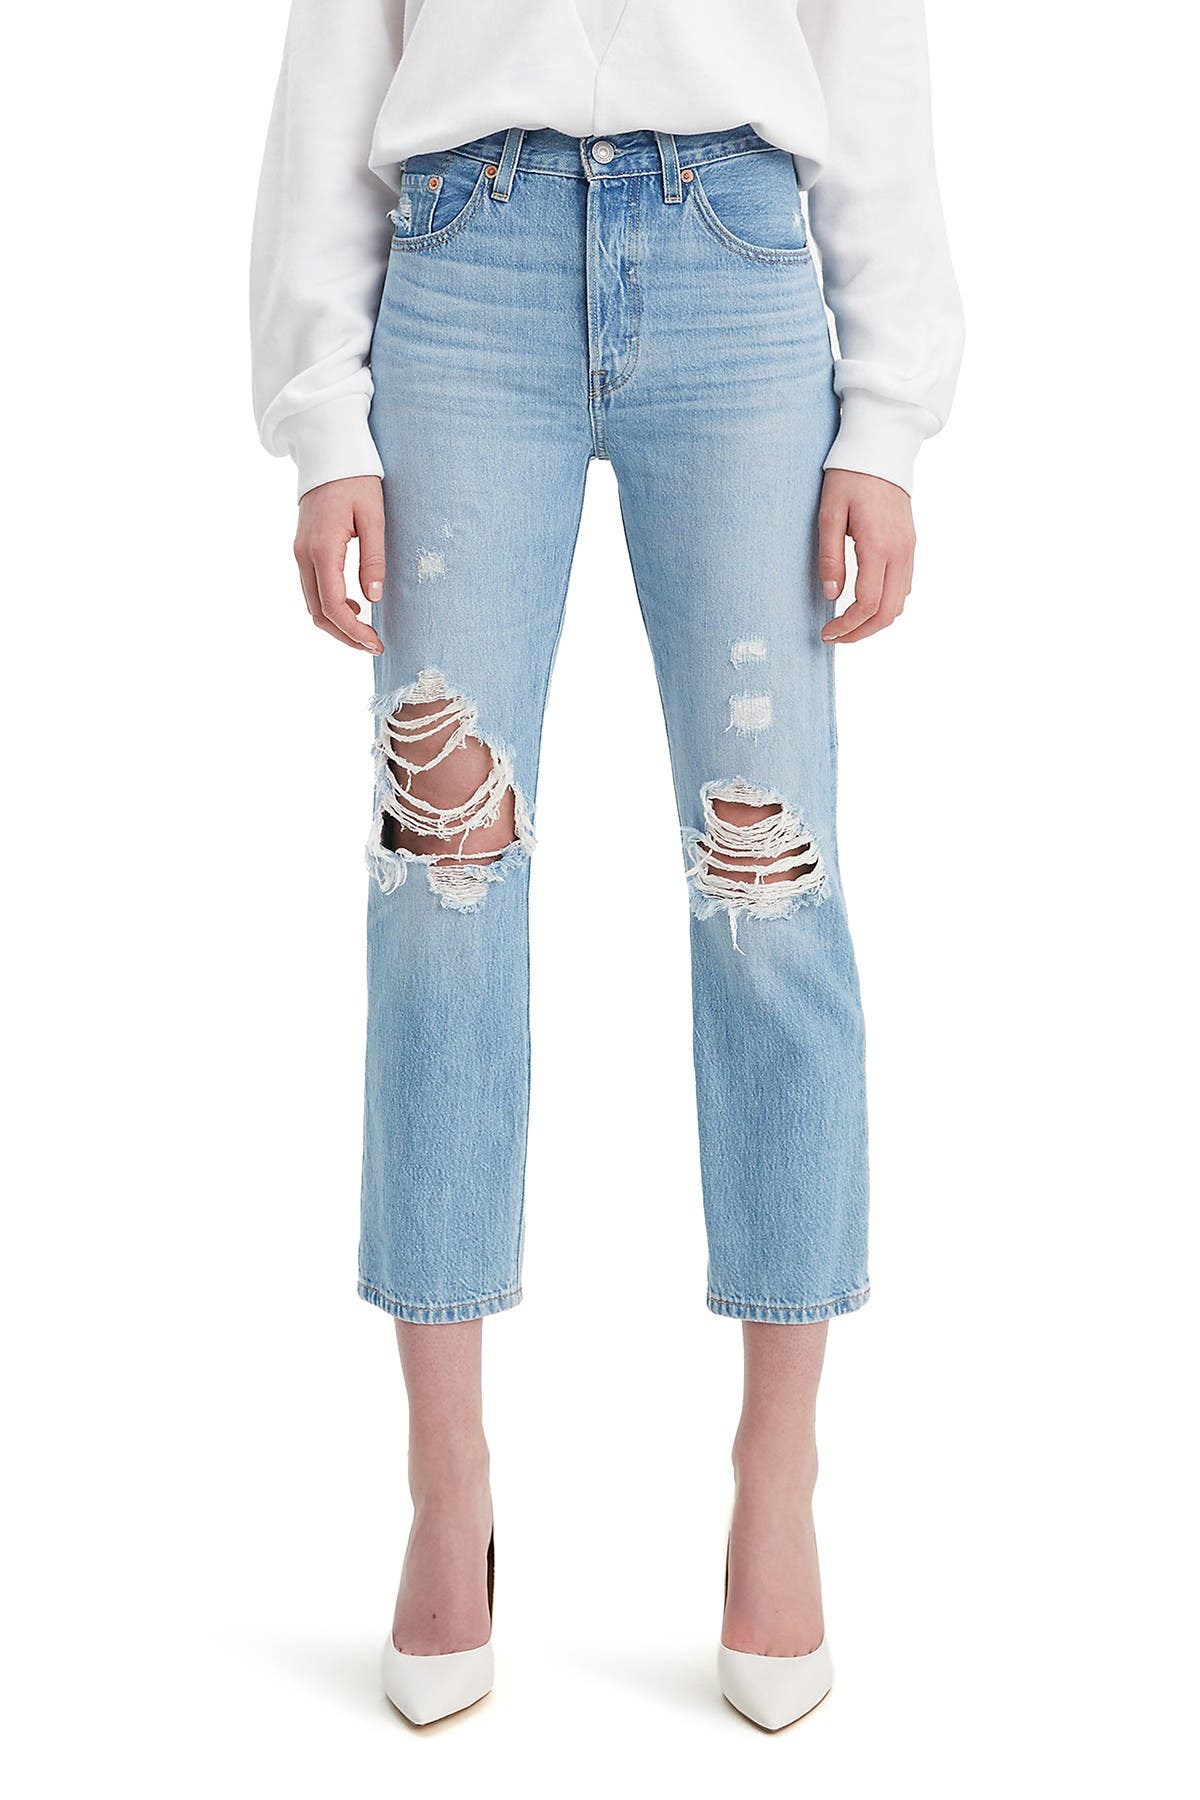 levis jeans nordstrom